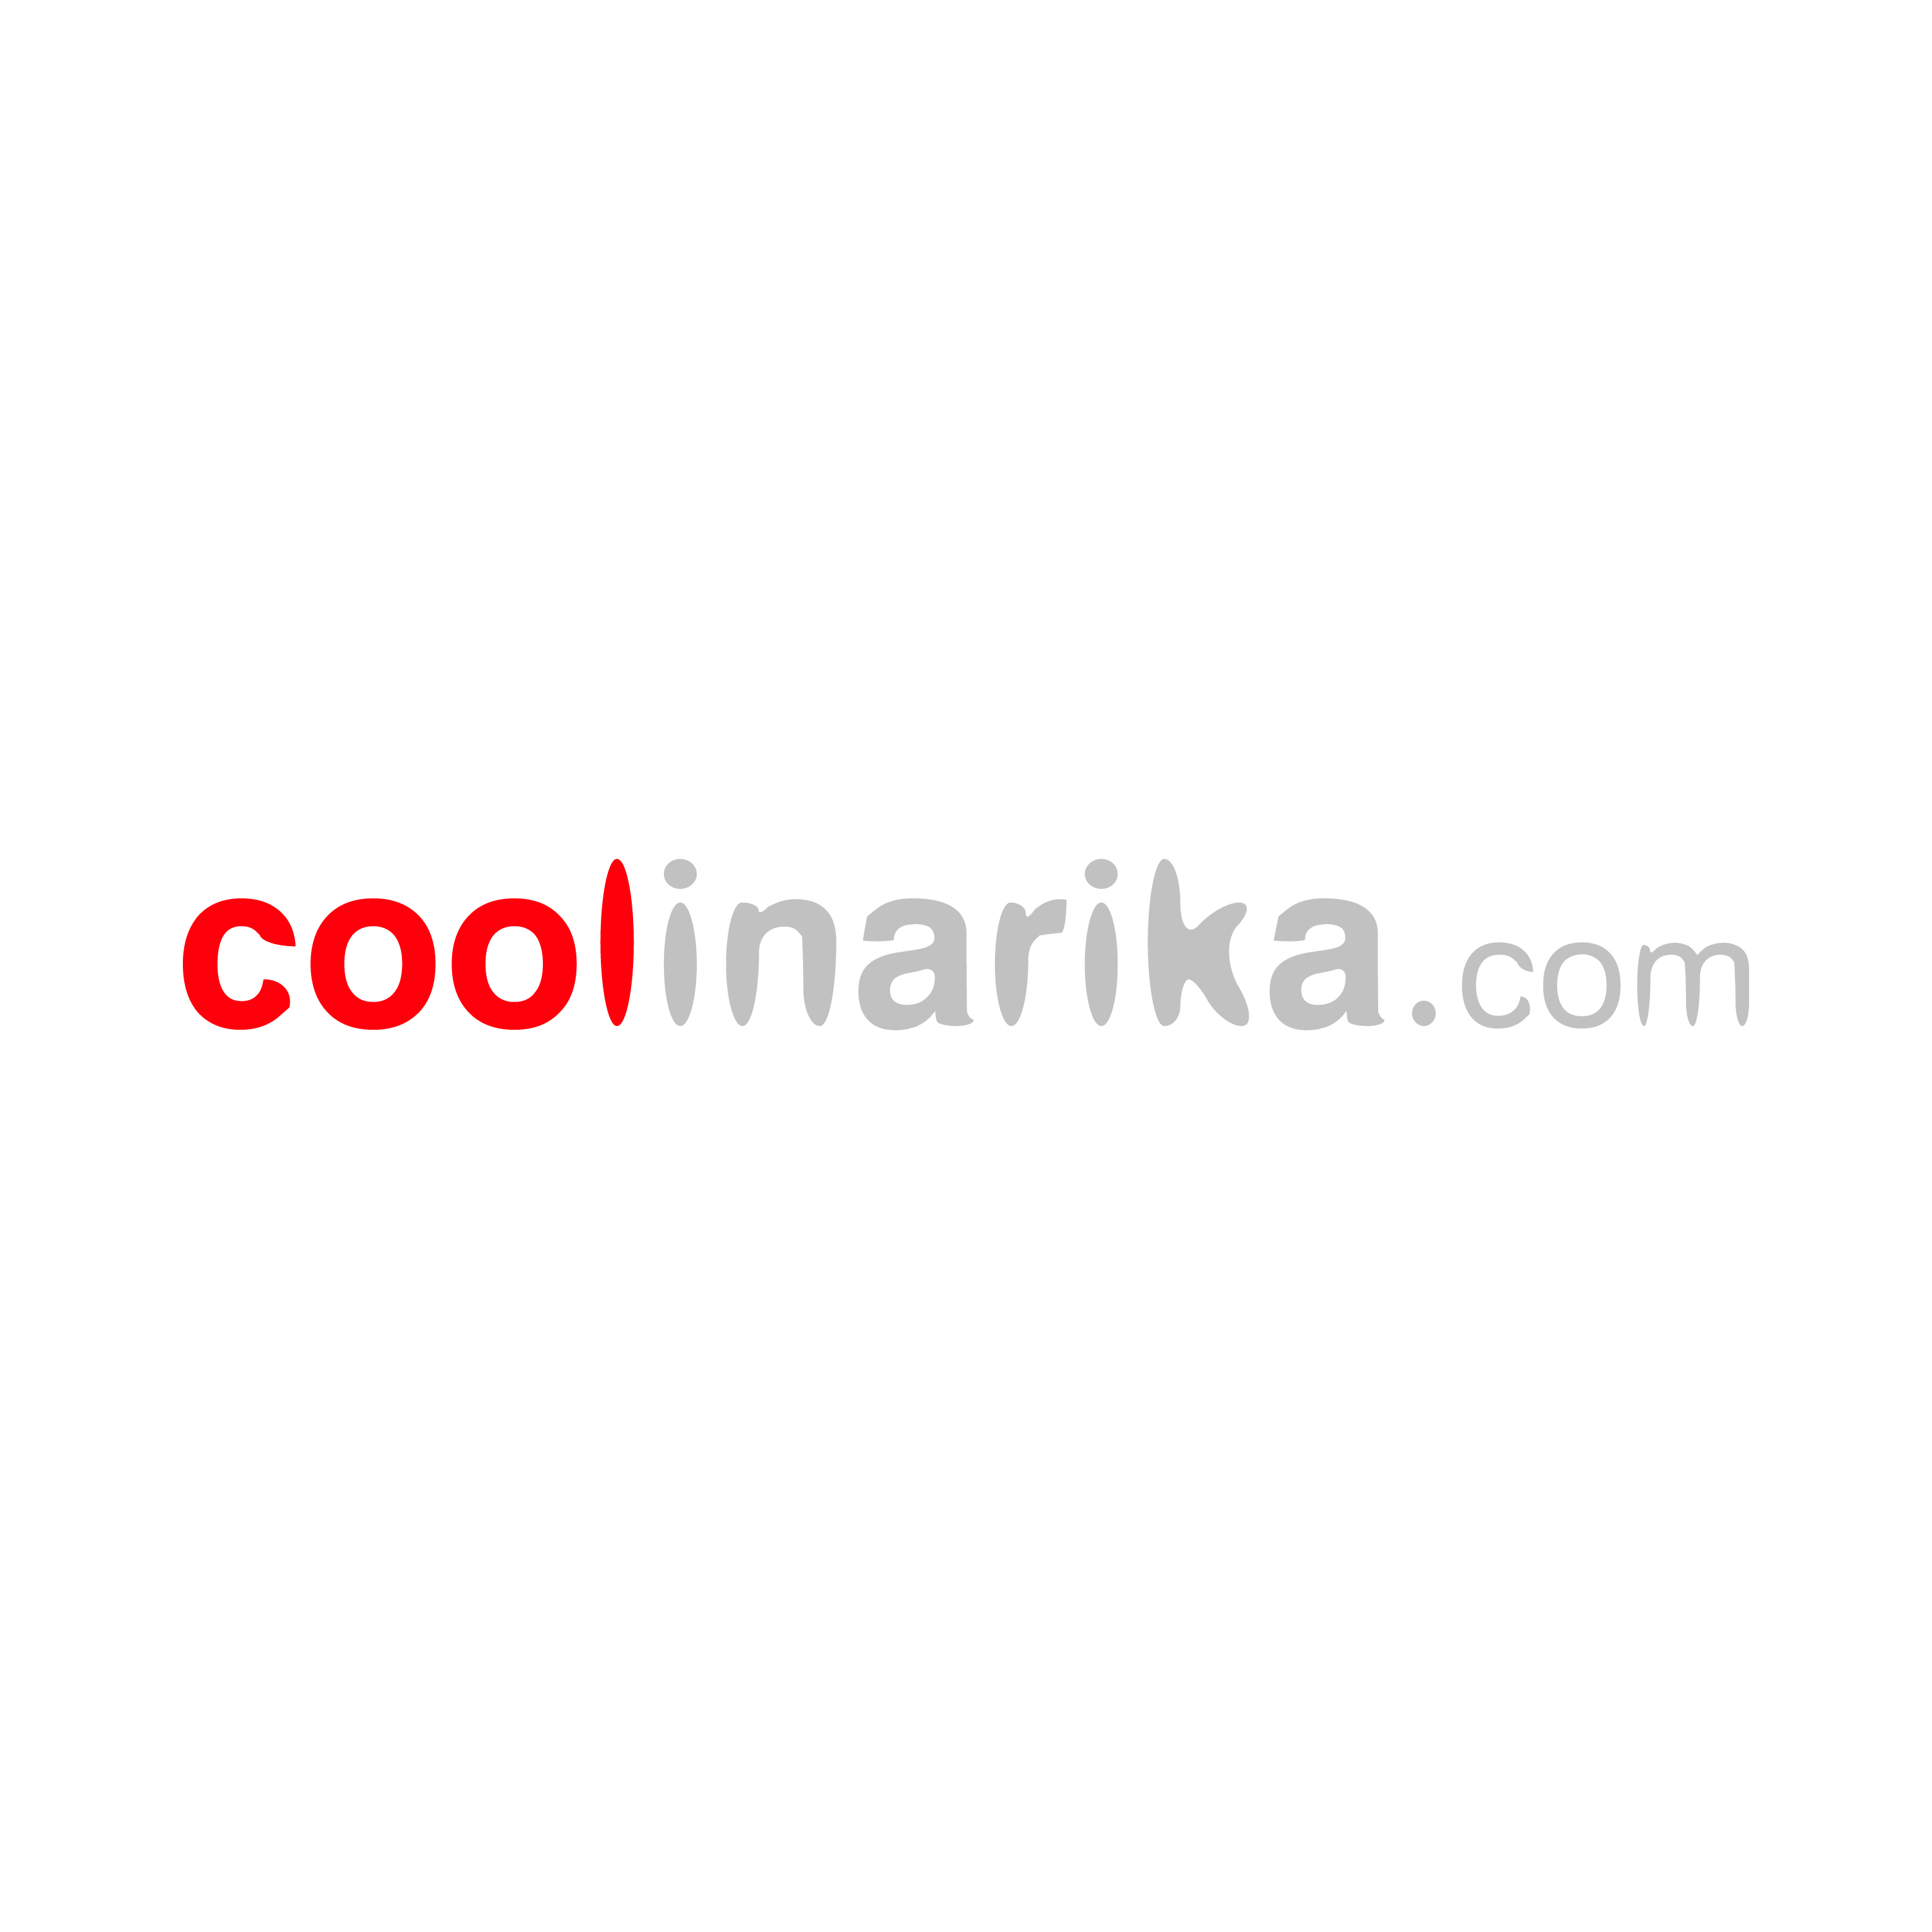 Coolinarika .com